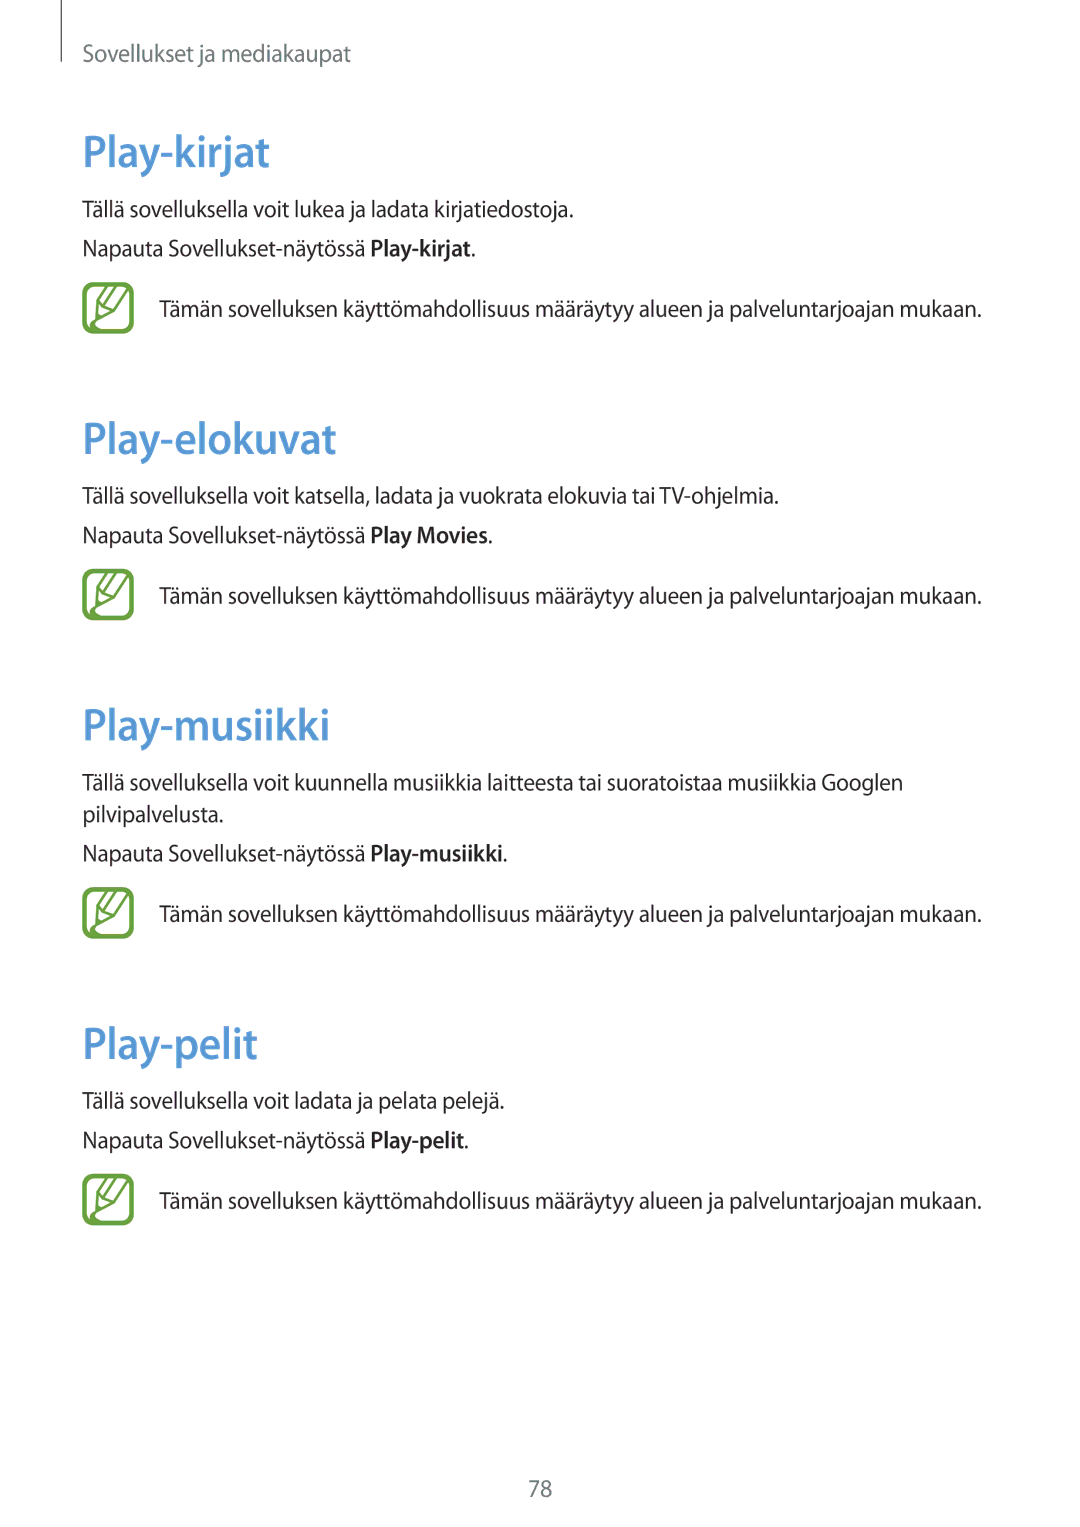 Samsung SM-G3815RWANEE, SM-G3815ZBANEE, SM-G3815HKANEE manual Play-kirjat, Play-elokuvat, Play-musiikki, Play-pelit 